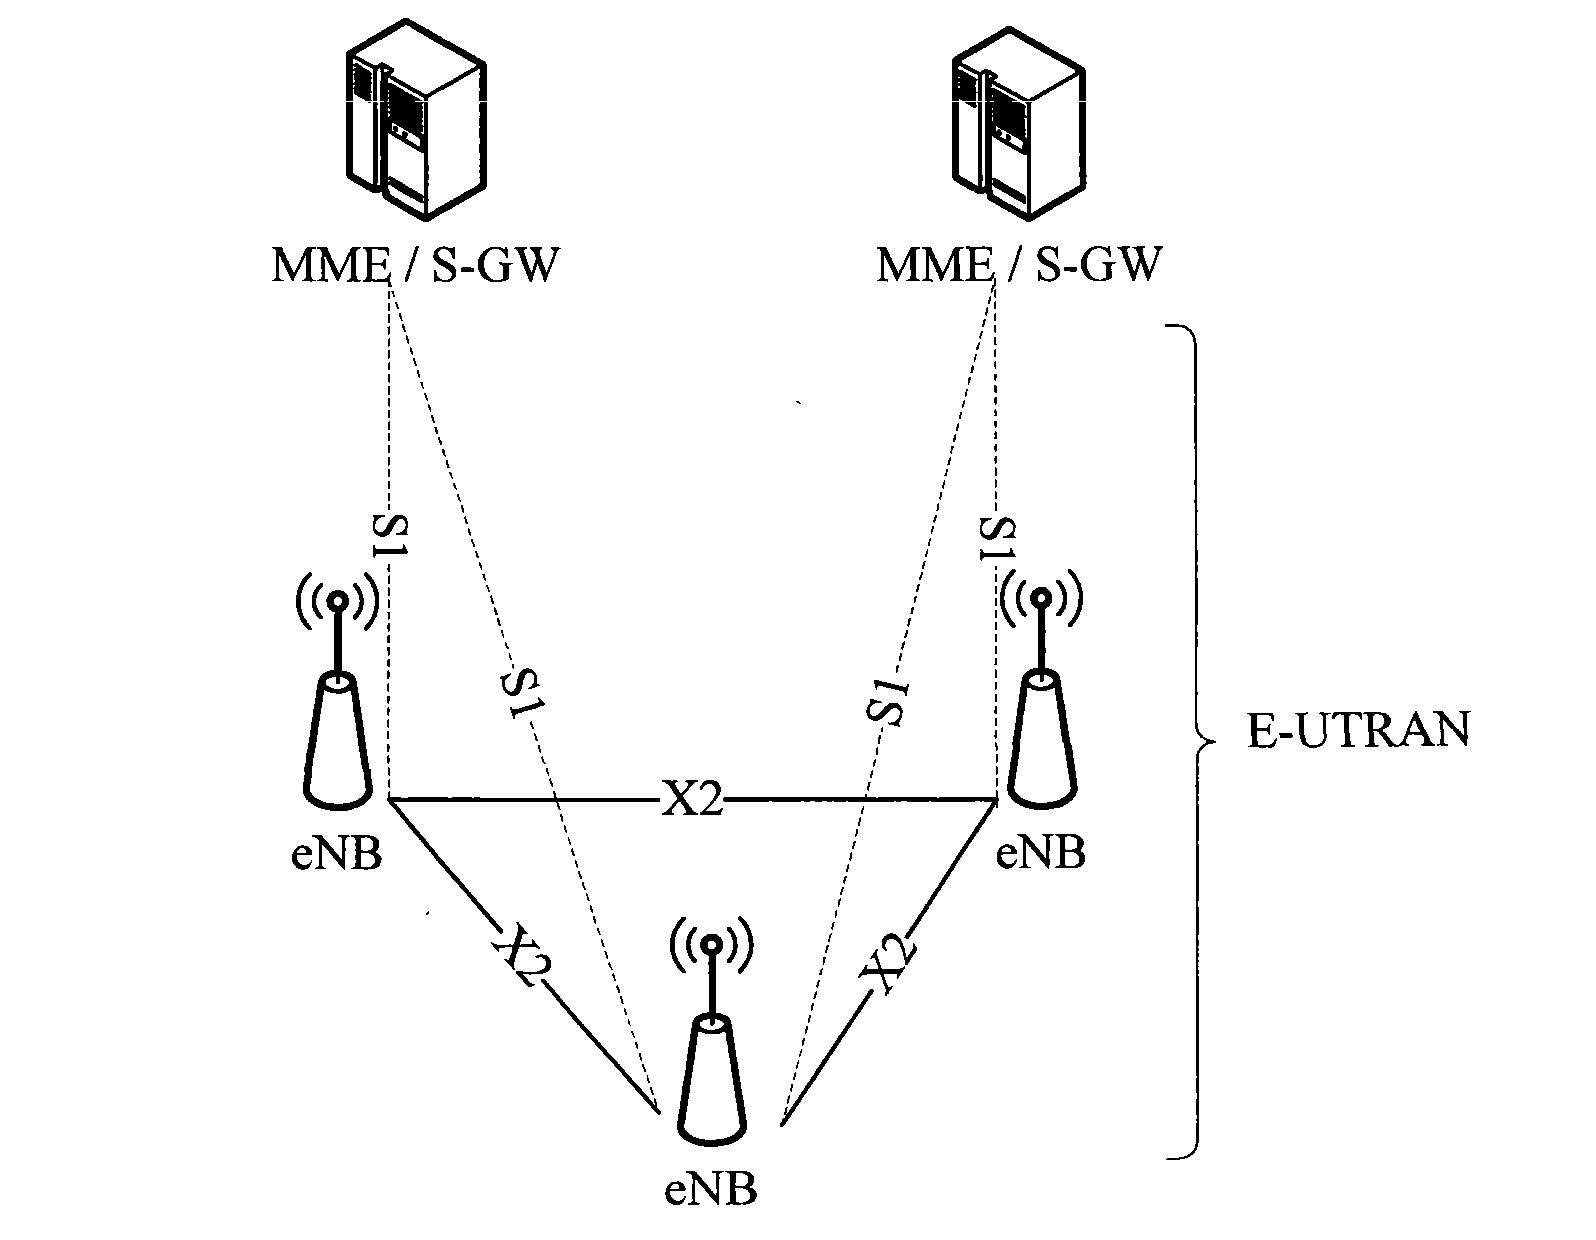 Method for detecting radio link failure